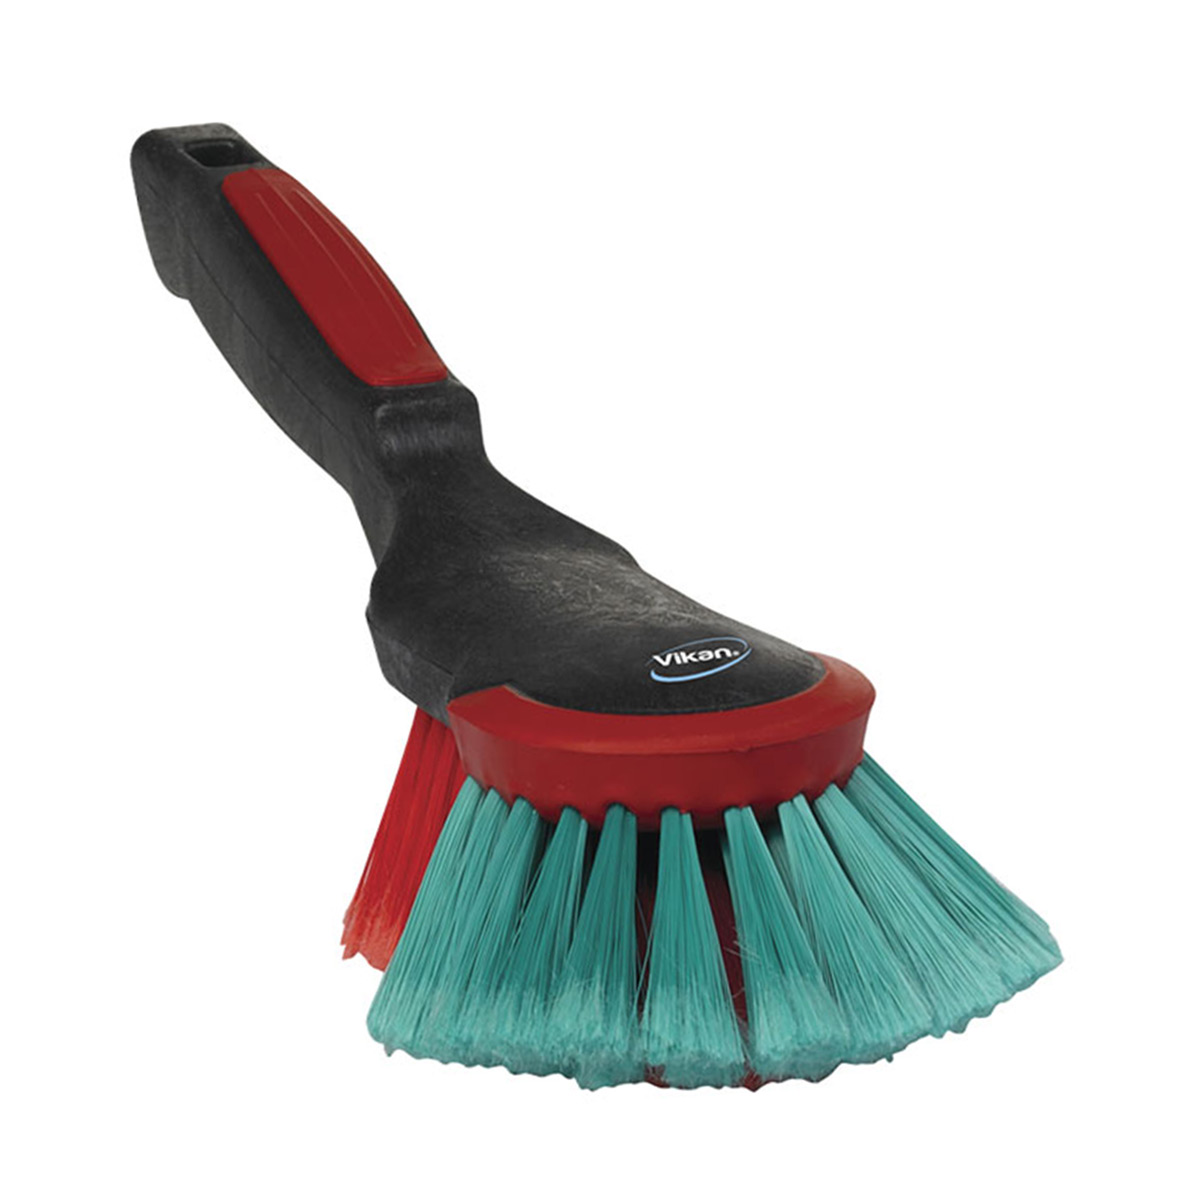 cleaning-equipment-brushware-vikan-vehicle-hand-brush-soft-split-bristle-black-polypropylene-handle-red-green-nylon-filaments-rubber-edge-protect-vehicle-paintwork-vjs-distributors-28/T524652